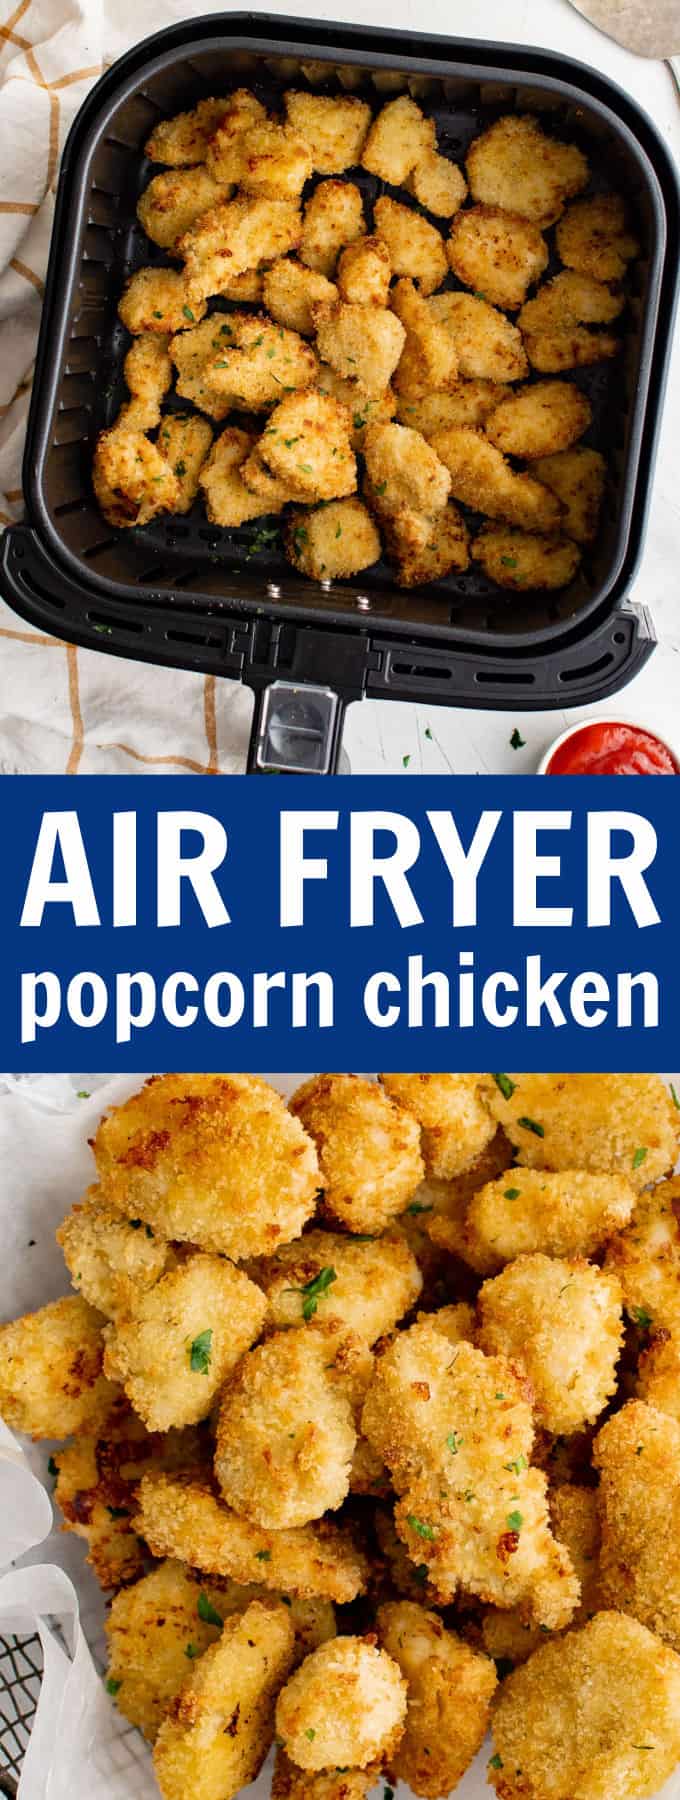 an air fryer basket full of air fryer popcorn chicken pieces.